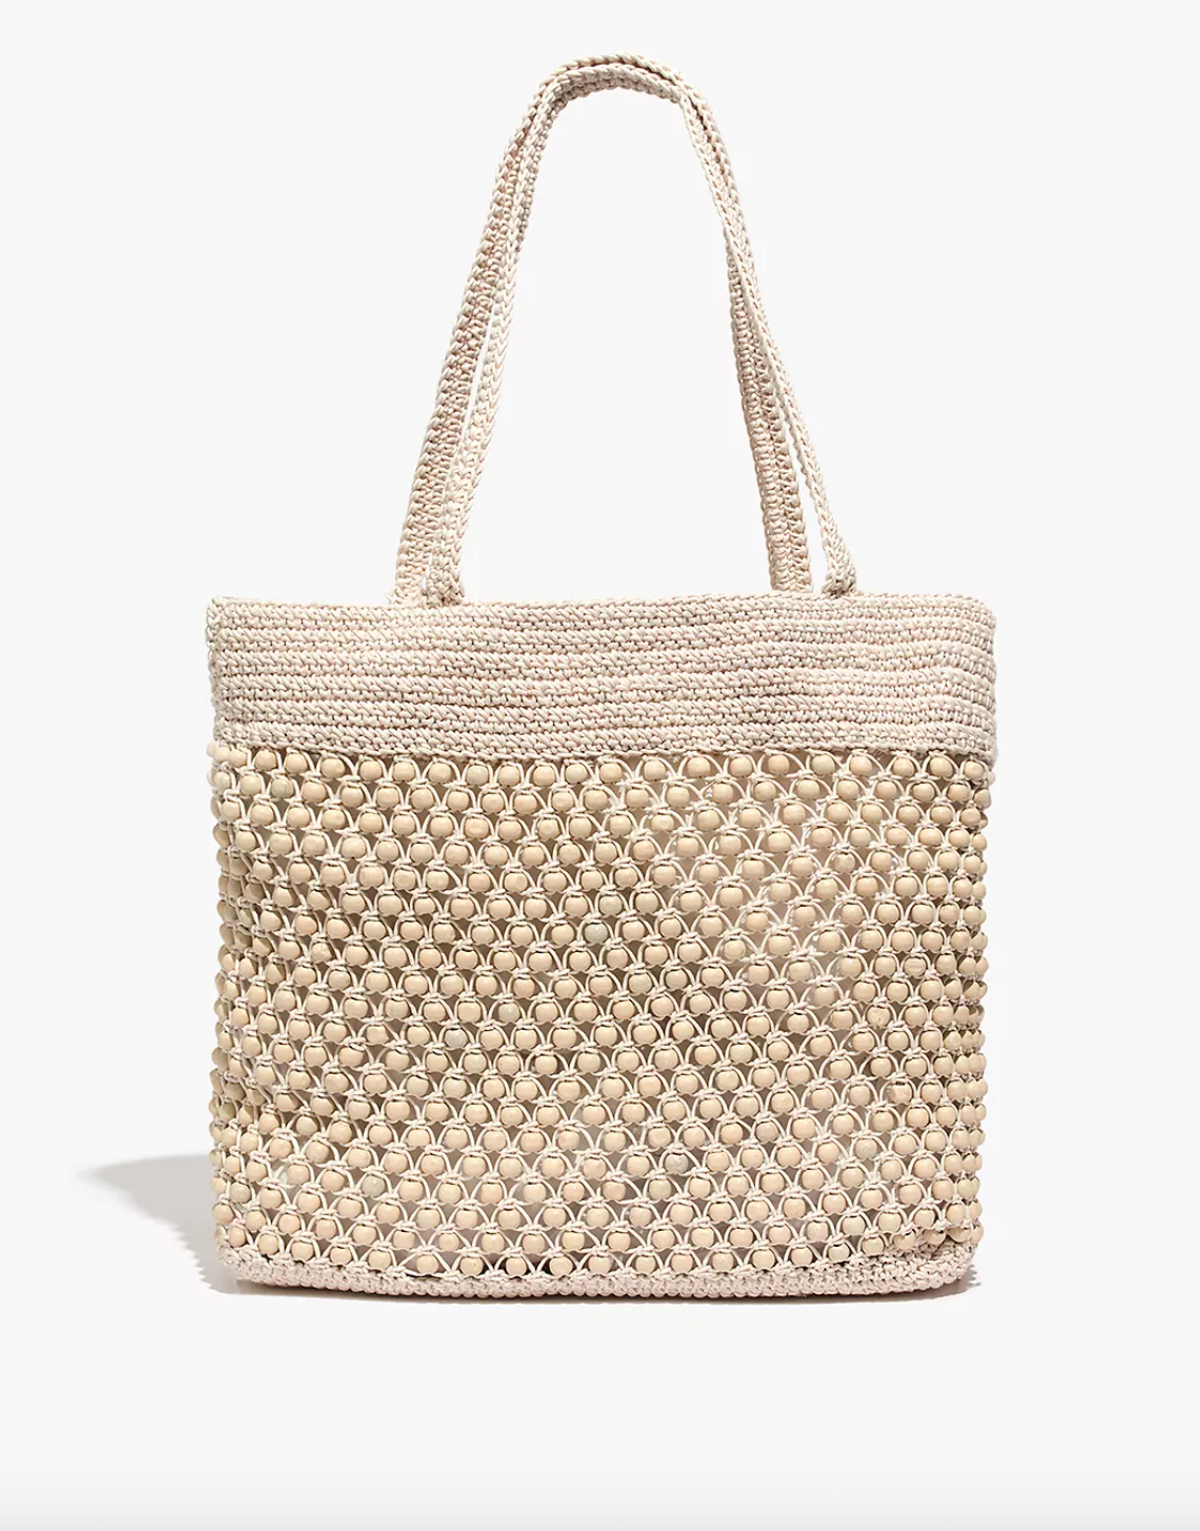 The Beaded Crochet Tote Bag